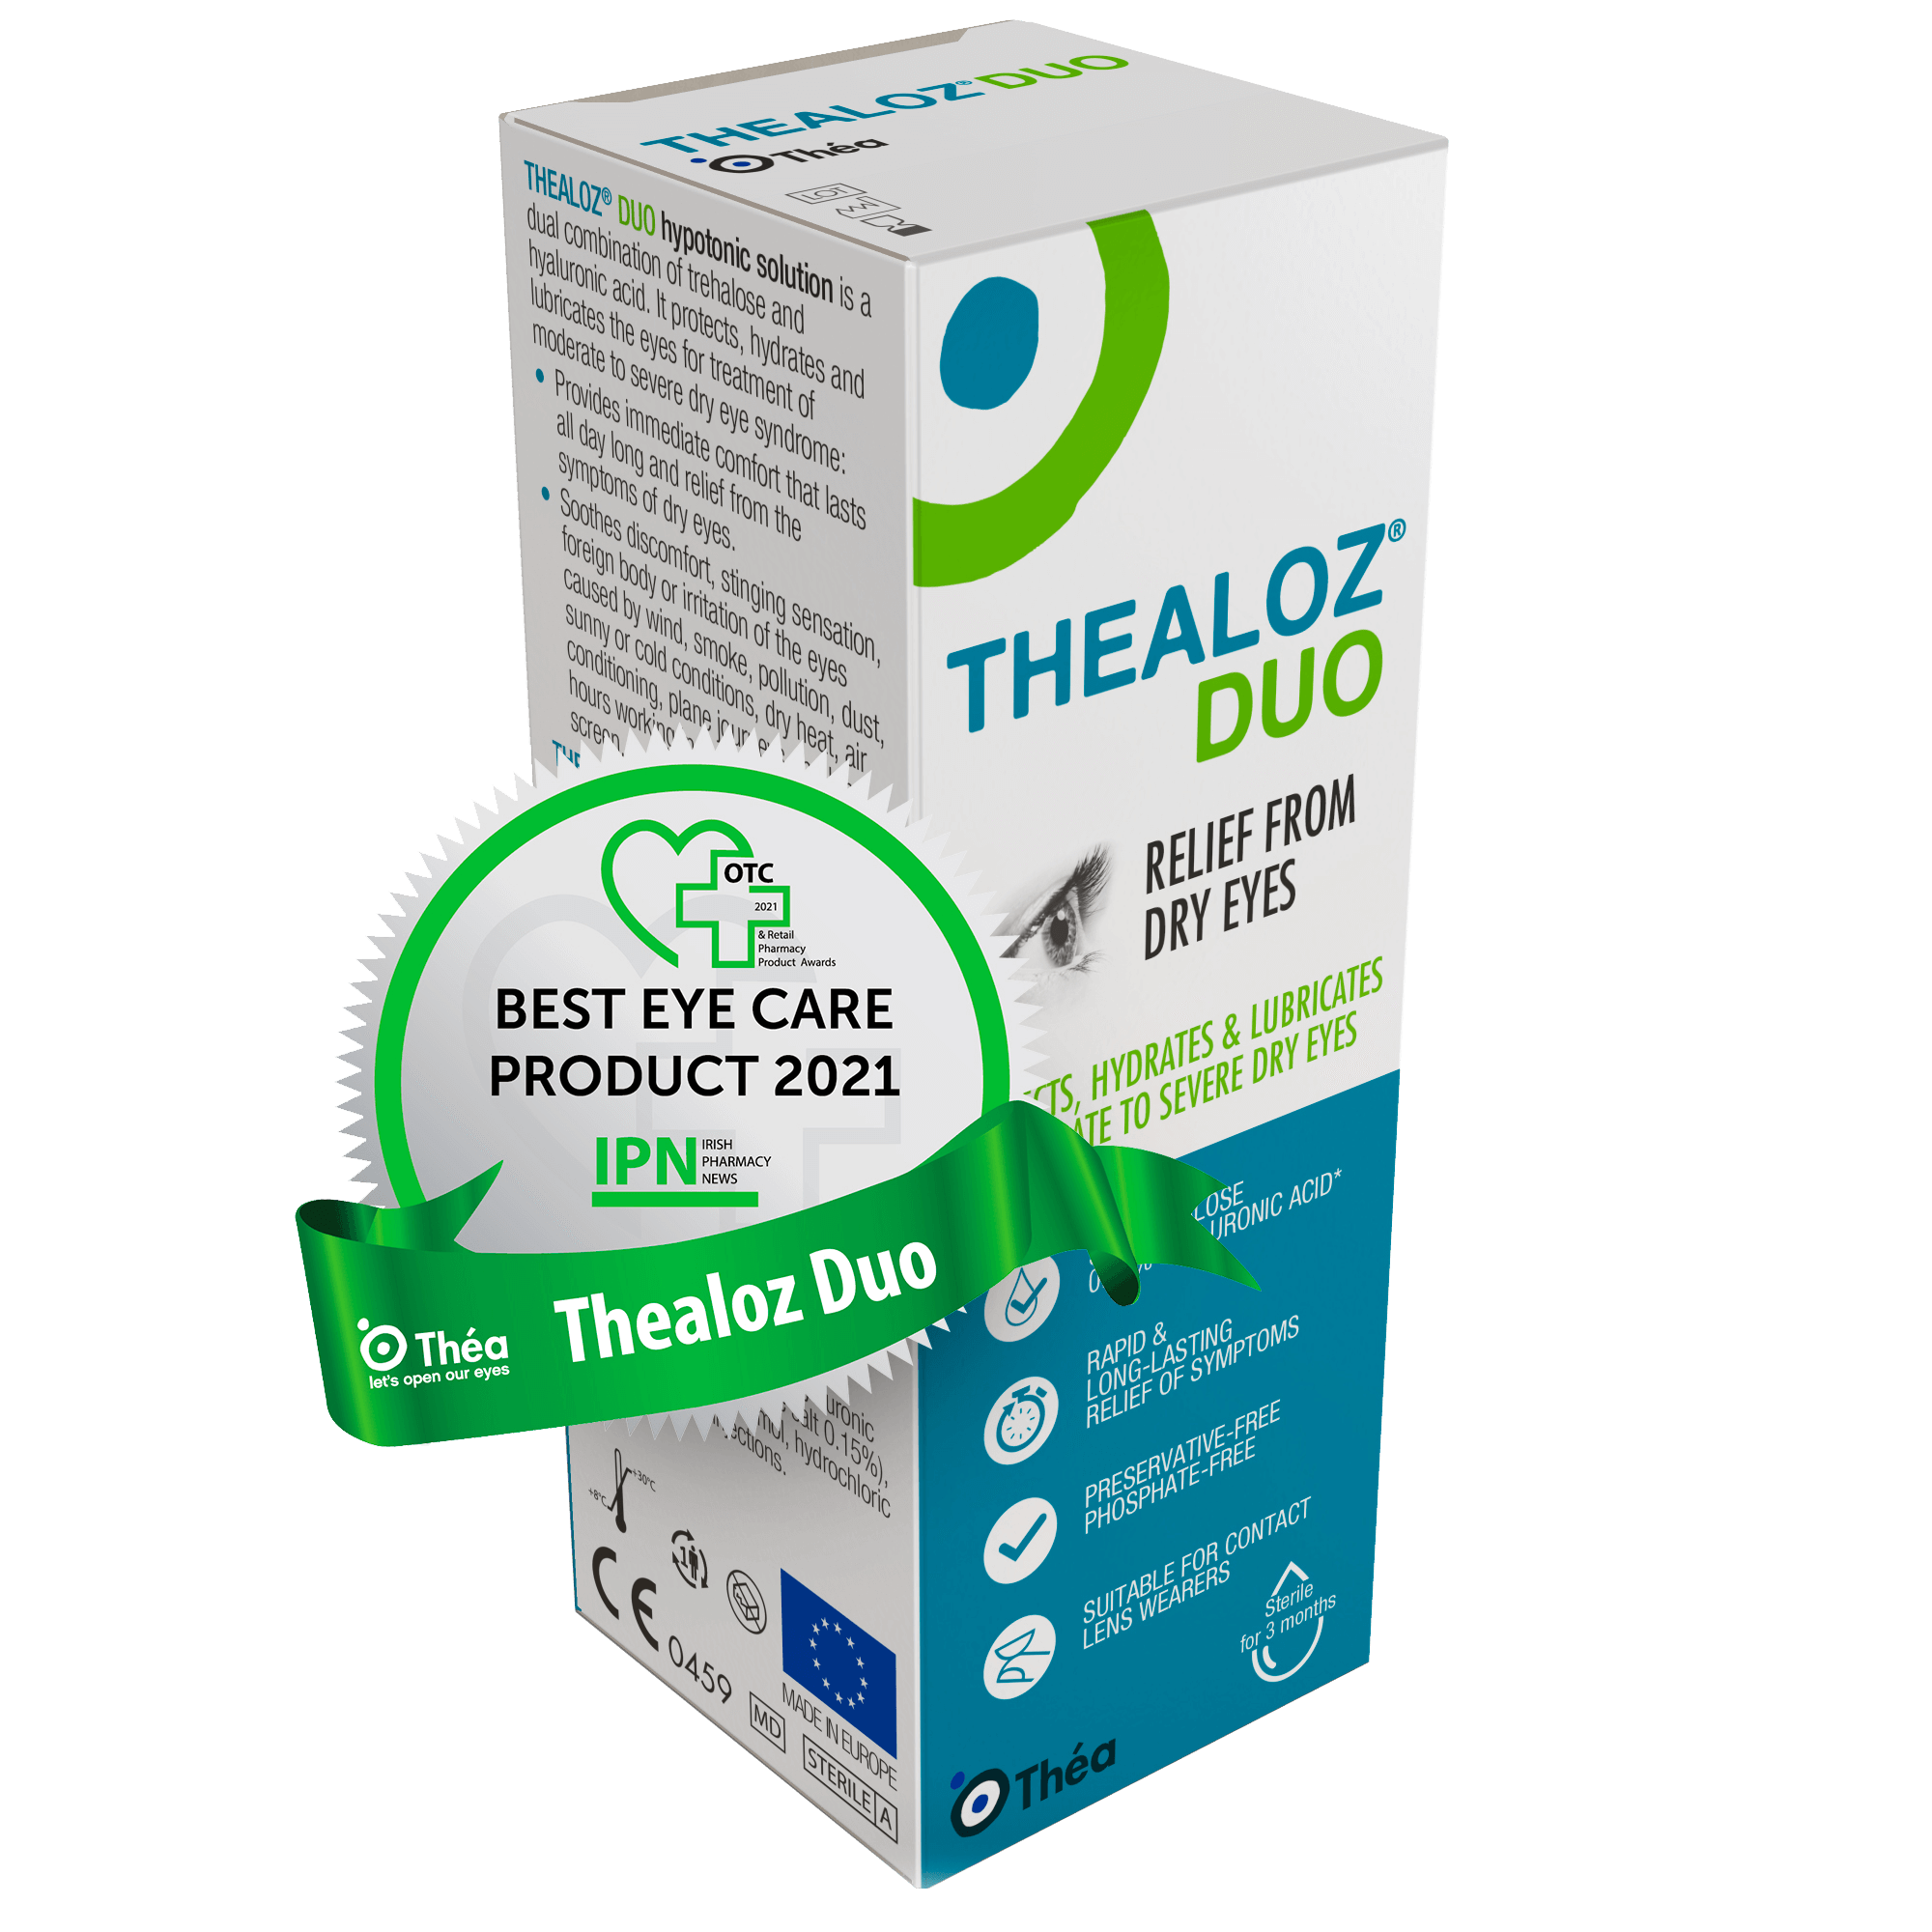 Thealoz Duo - ThéaPharma - Ireland's No.1 brand for eye care